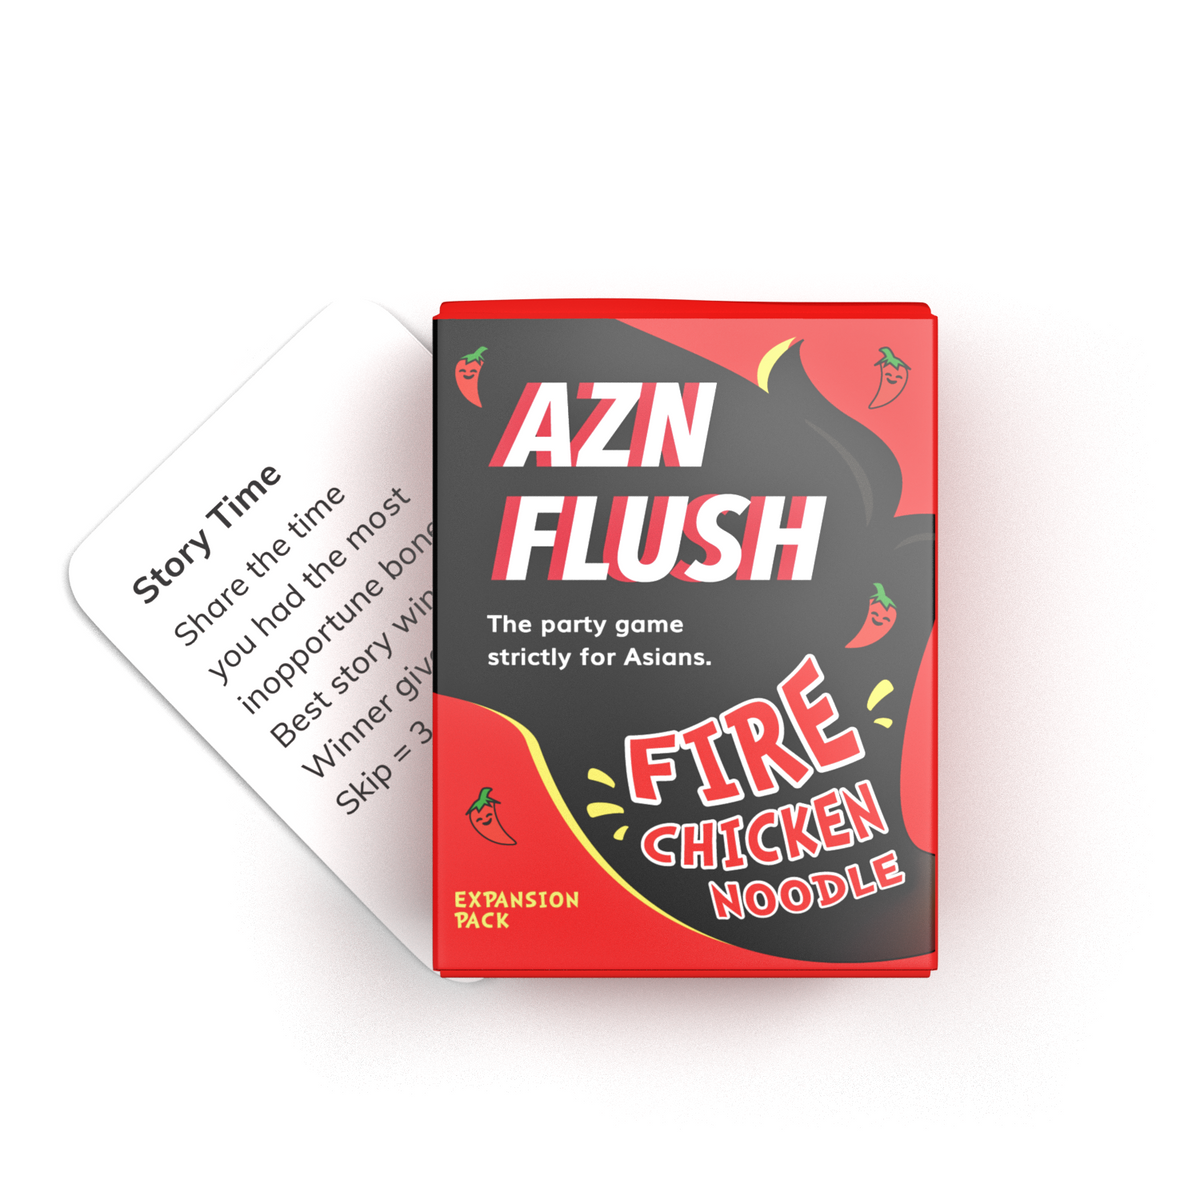 AZN FLUSH: FIRE CHICKEN NOODLE PACK